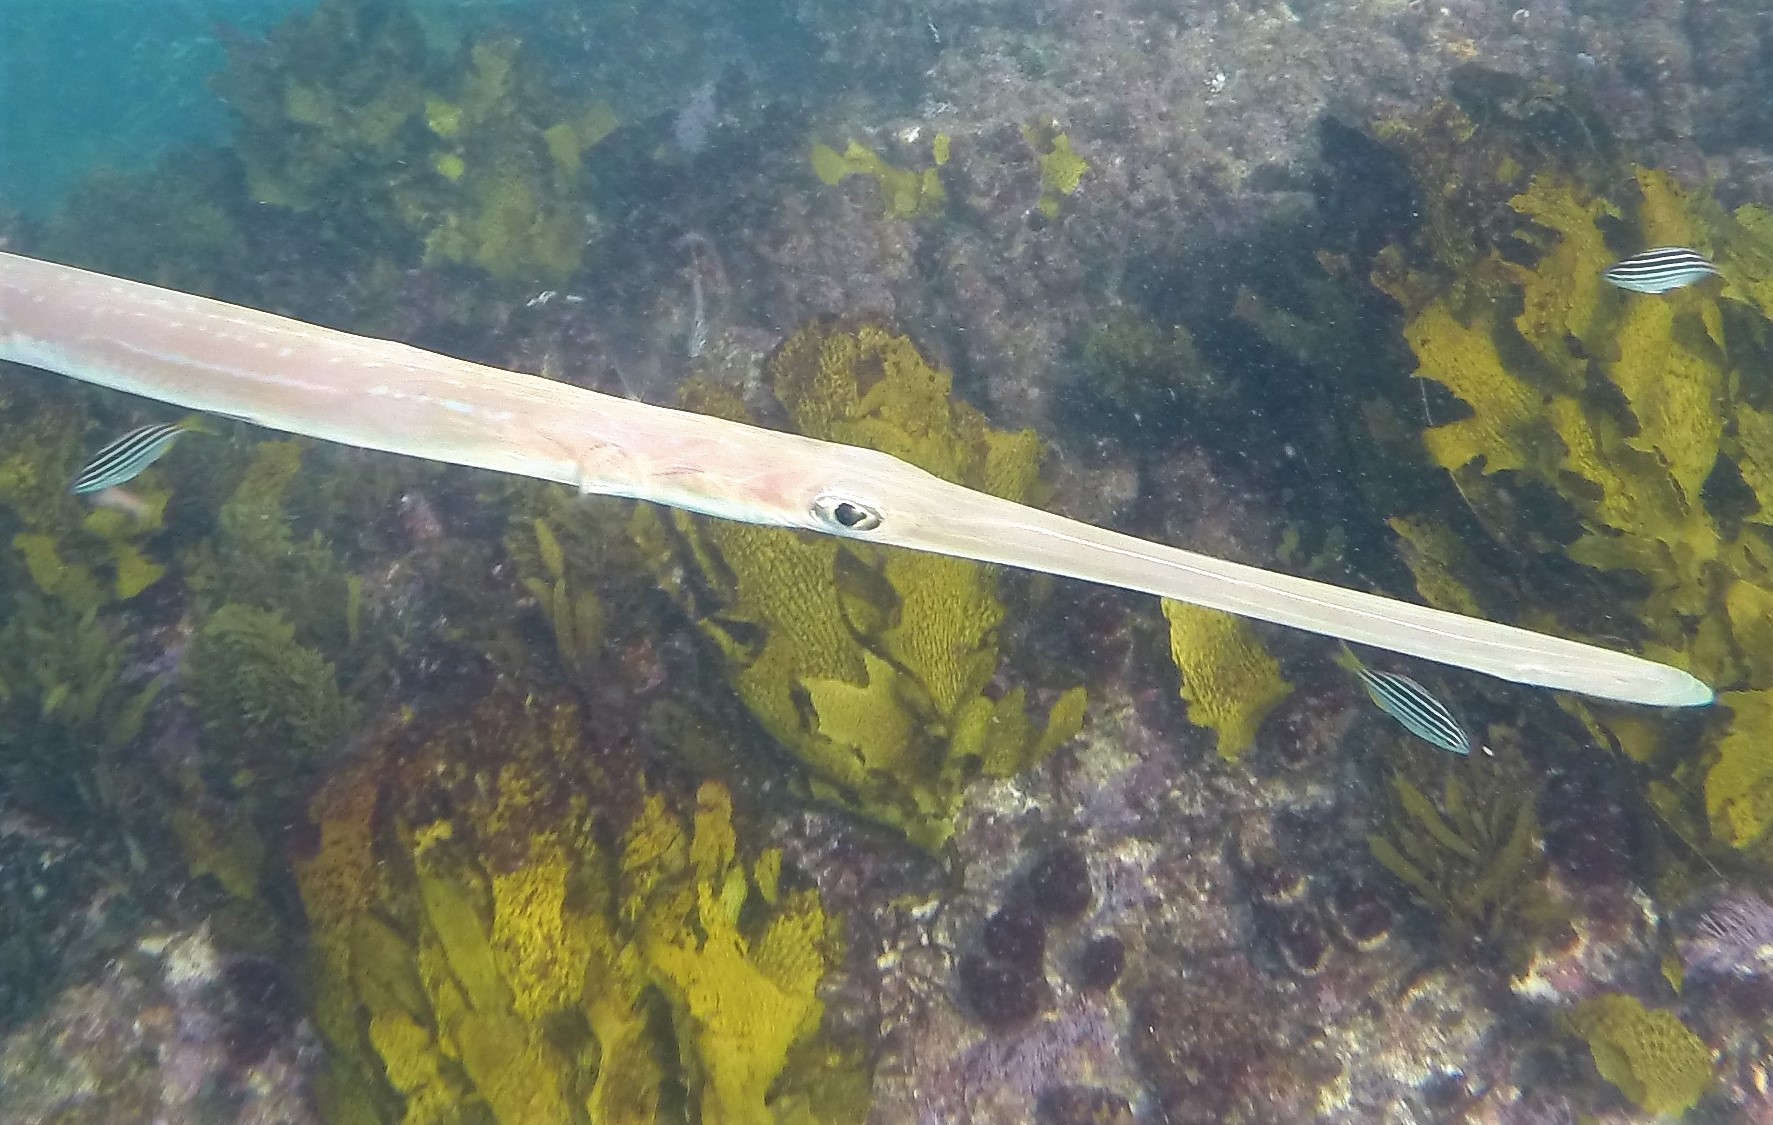 Image of Pacific cornetfish